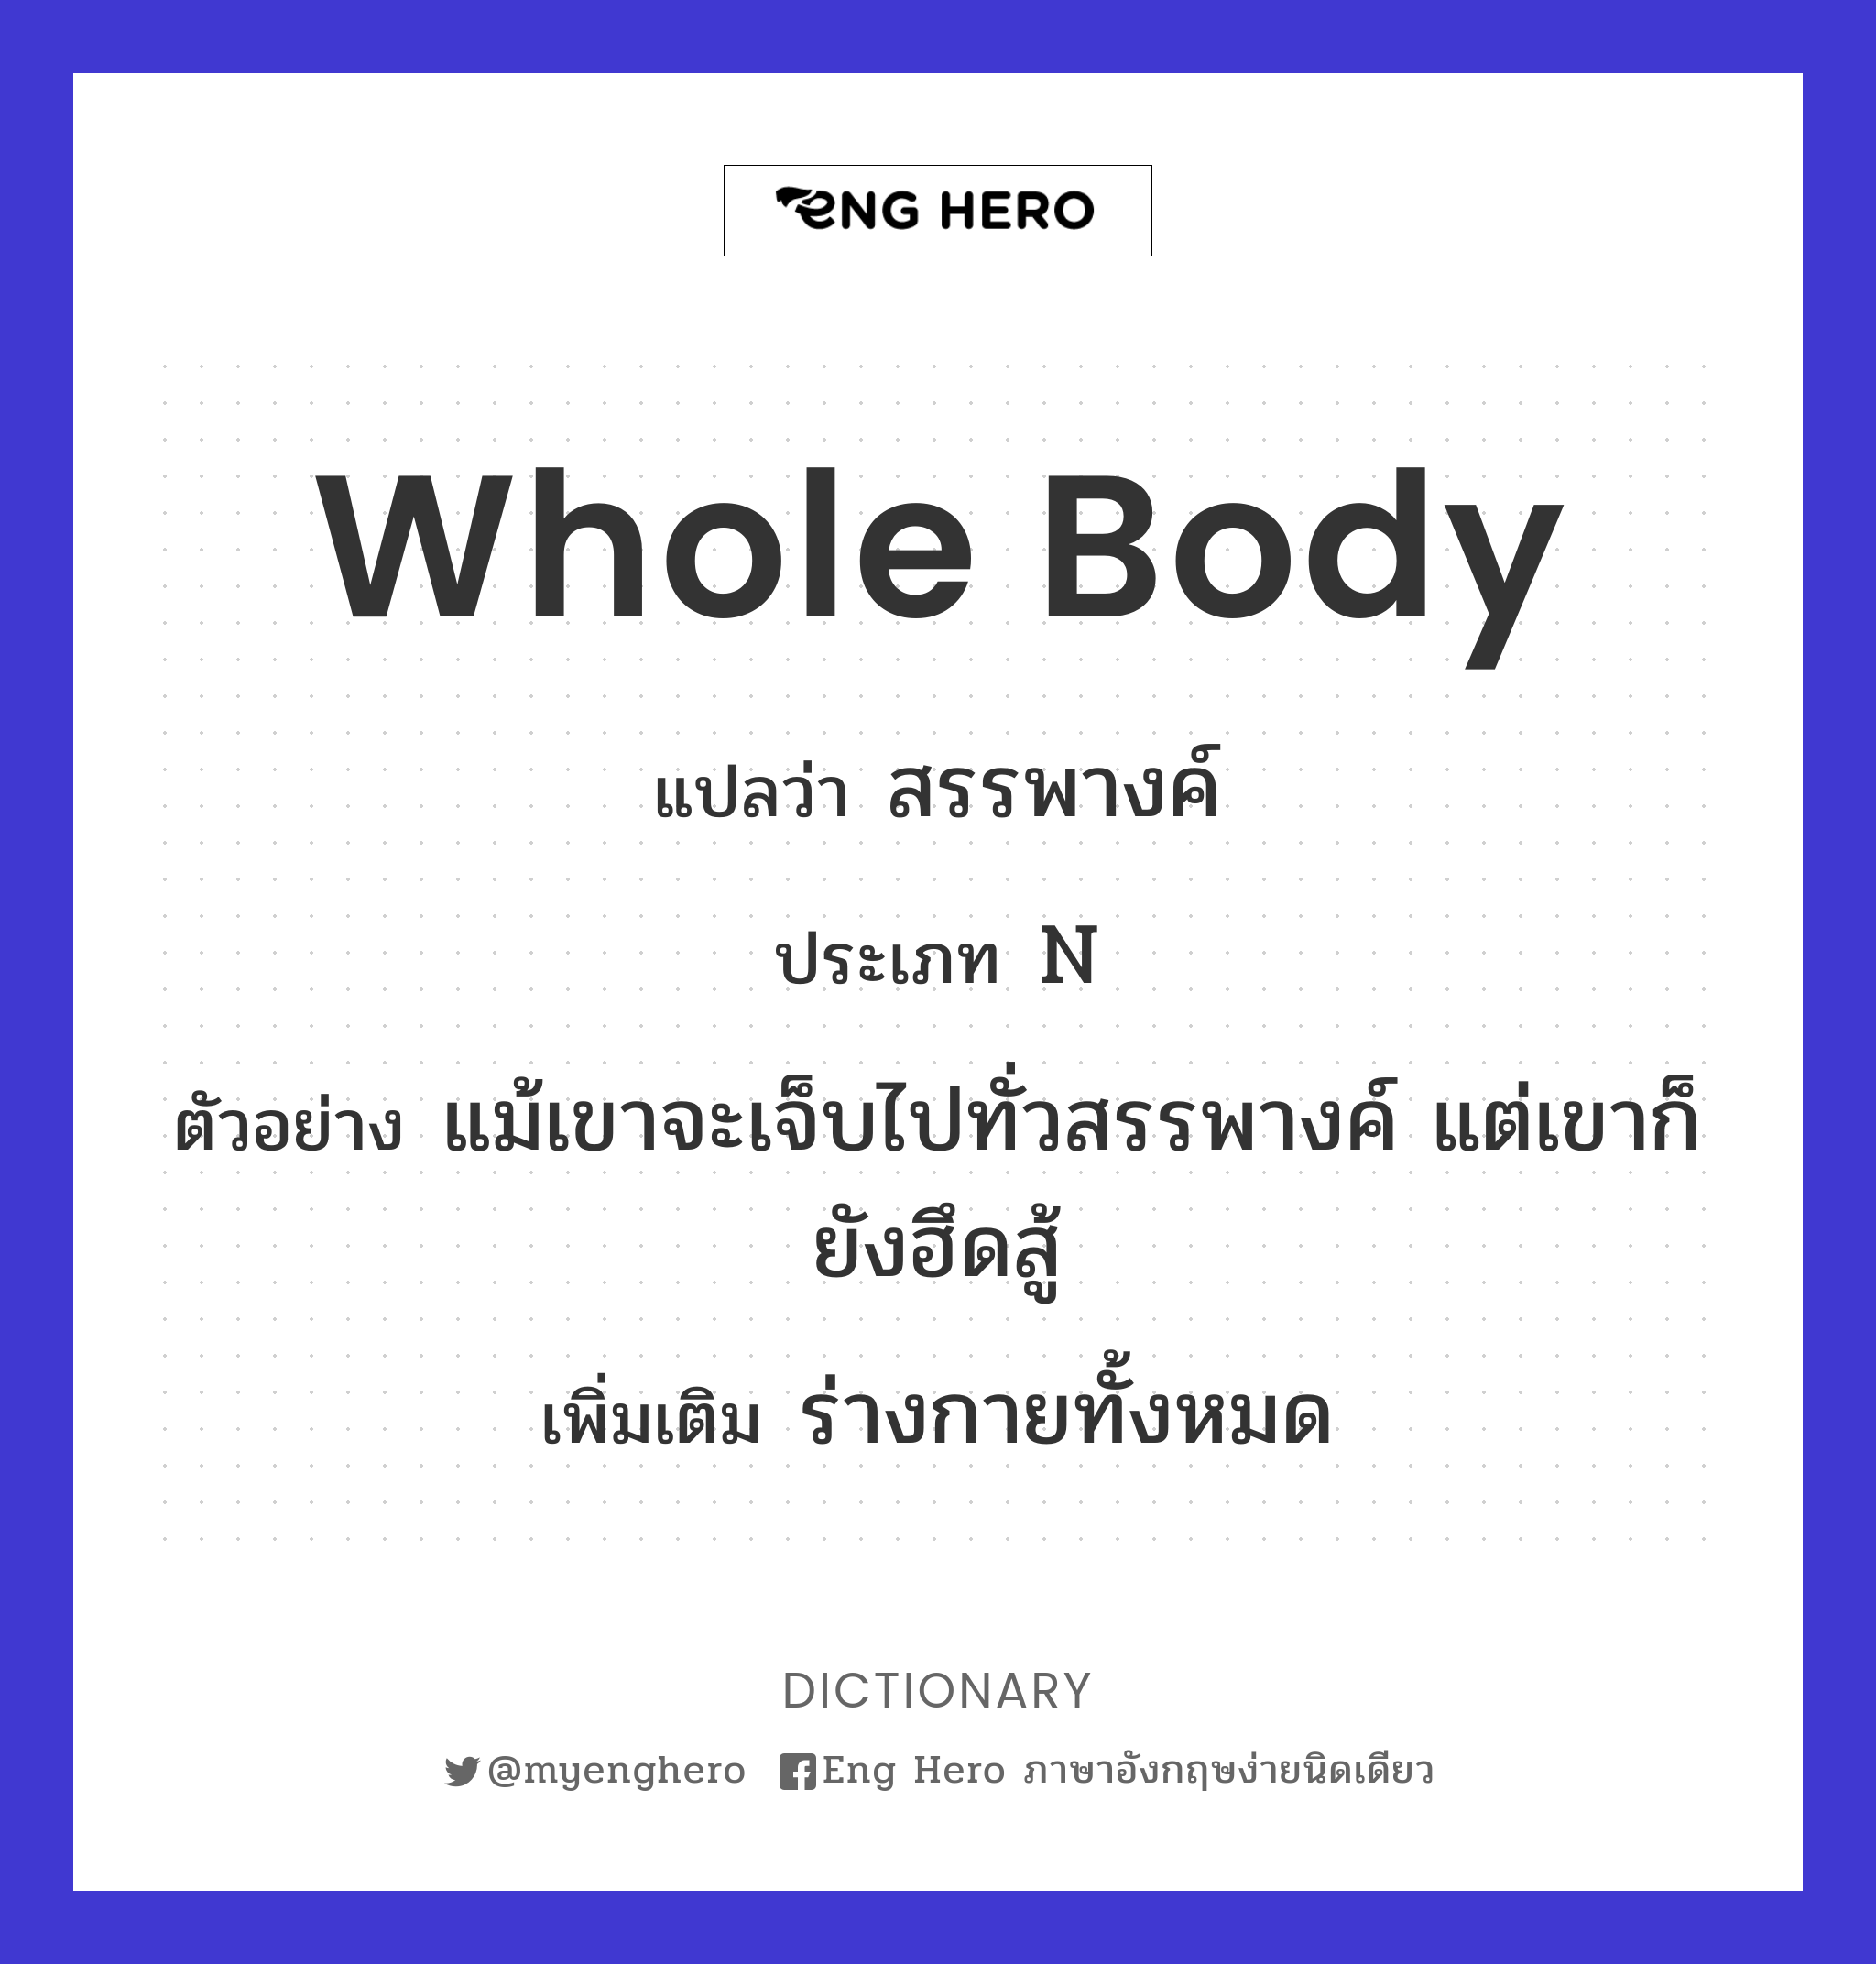 whole body